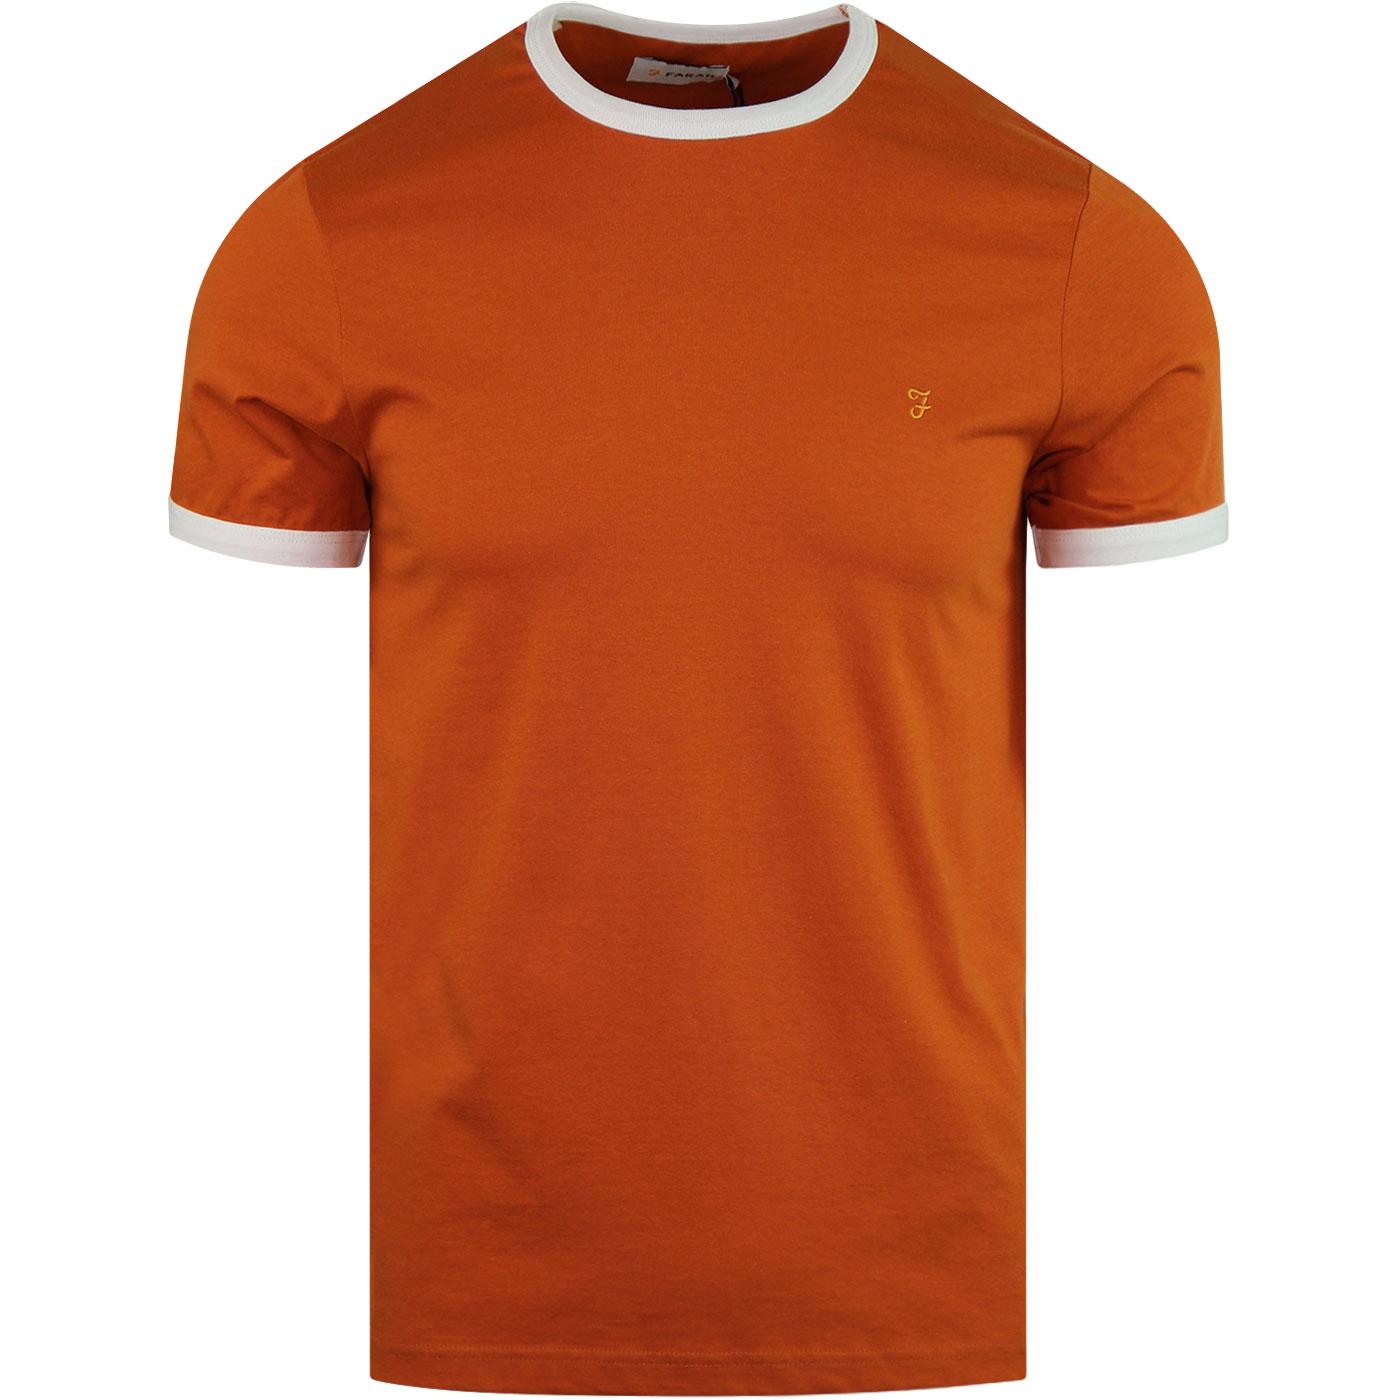 Groves FARAH Retro Mod Ringer T-Shirt (Goldfish)